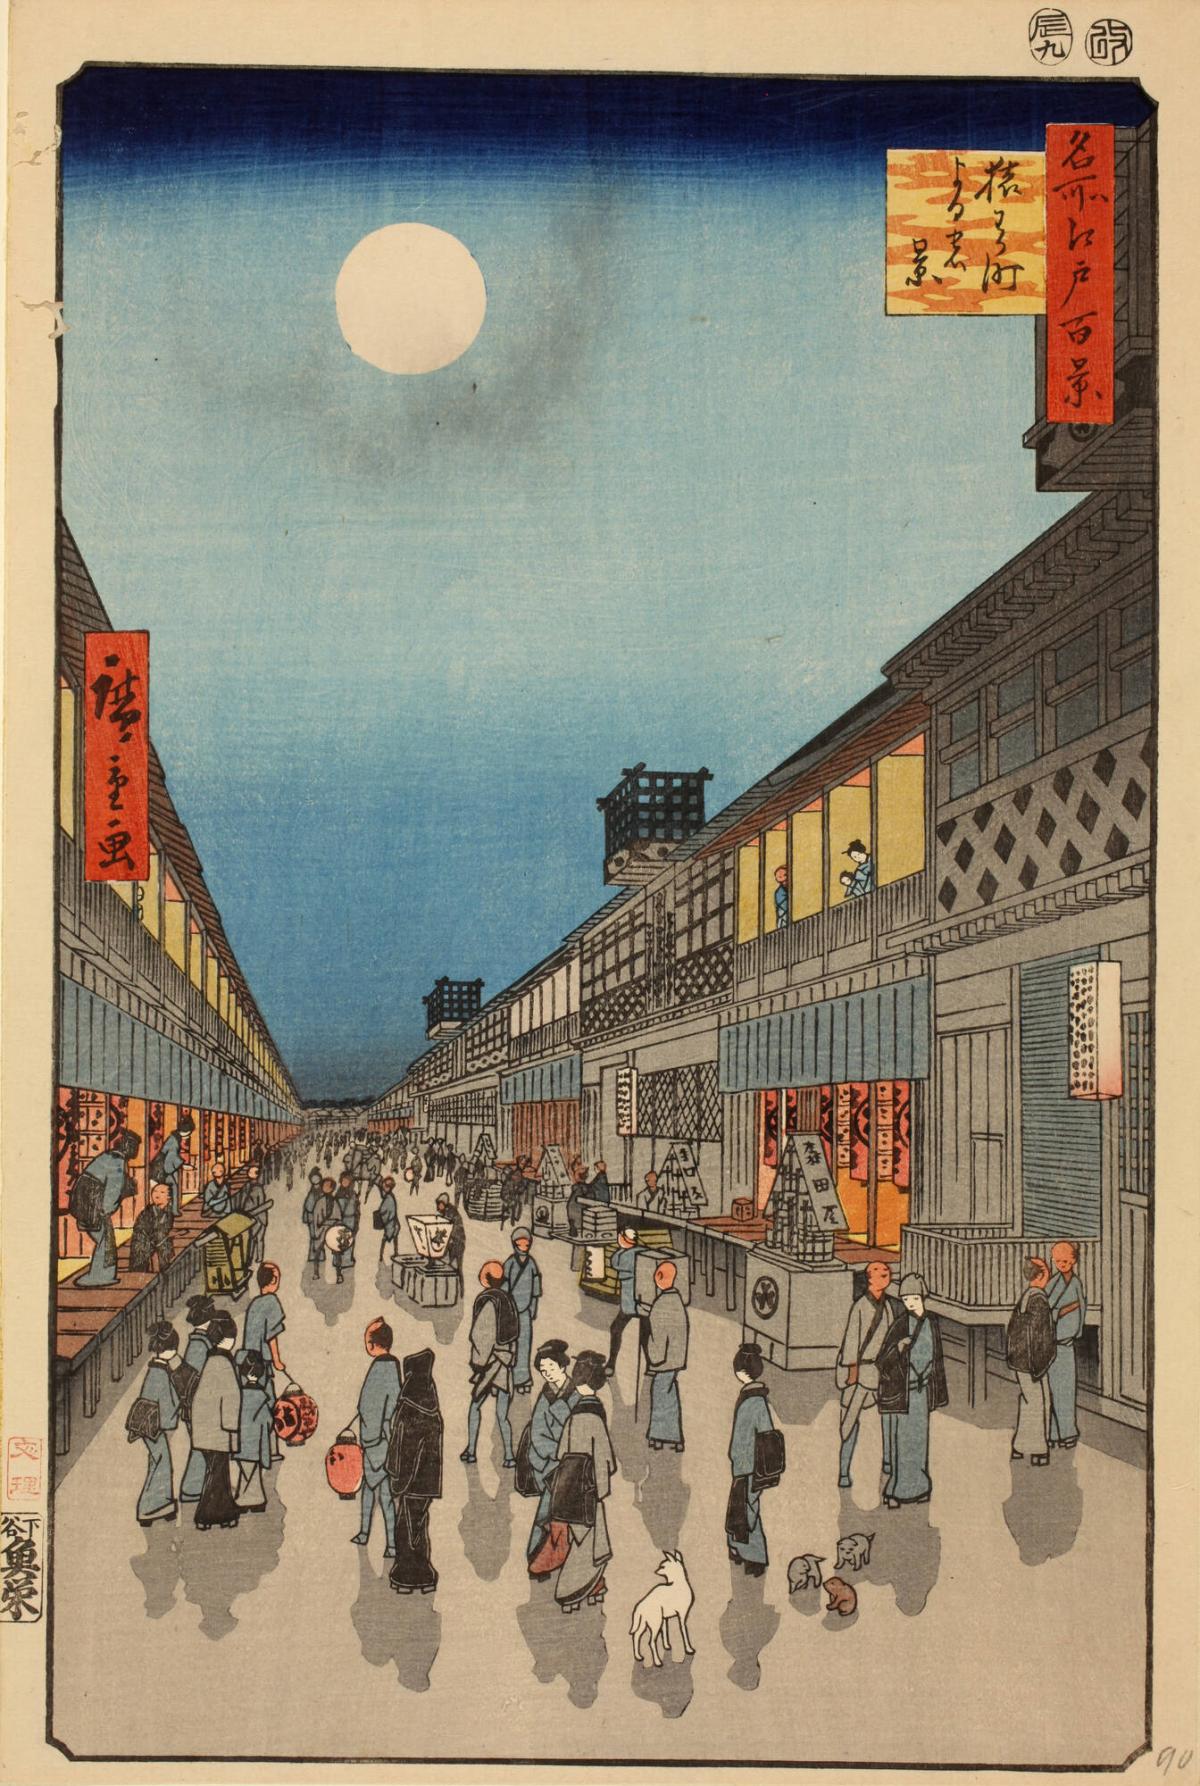 Night View of Saruwaka-machi (Saruwaka-machi yoru no kei), from the series One Hundred Famous Views of Edo (Meisho Edo hyakkei)